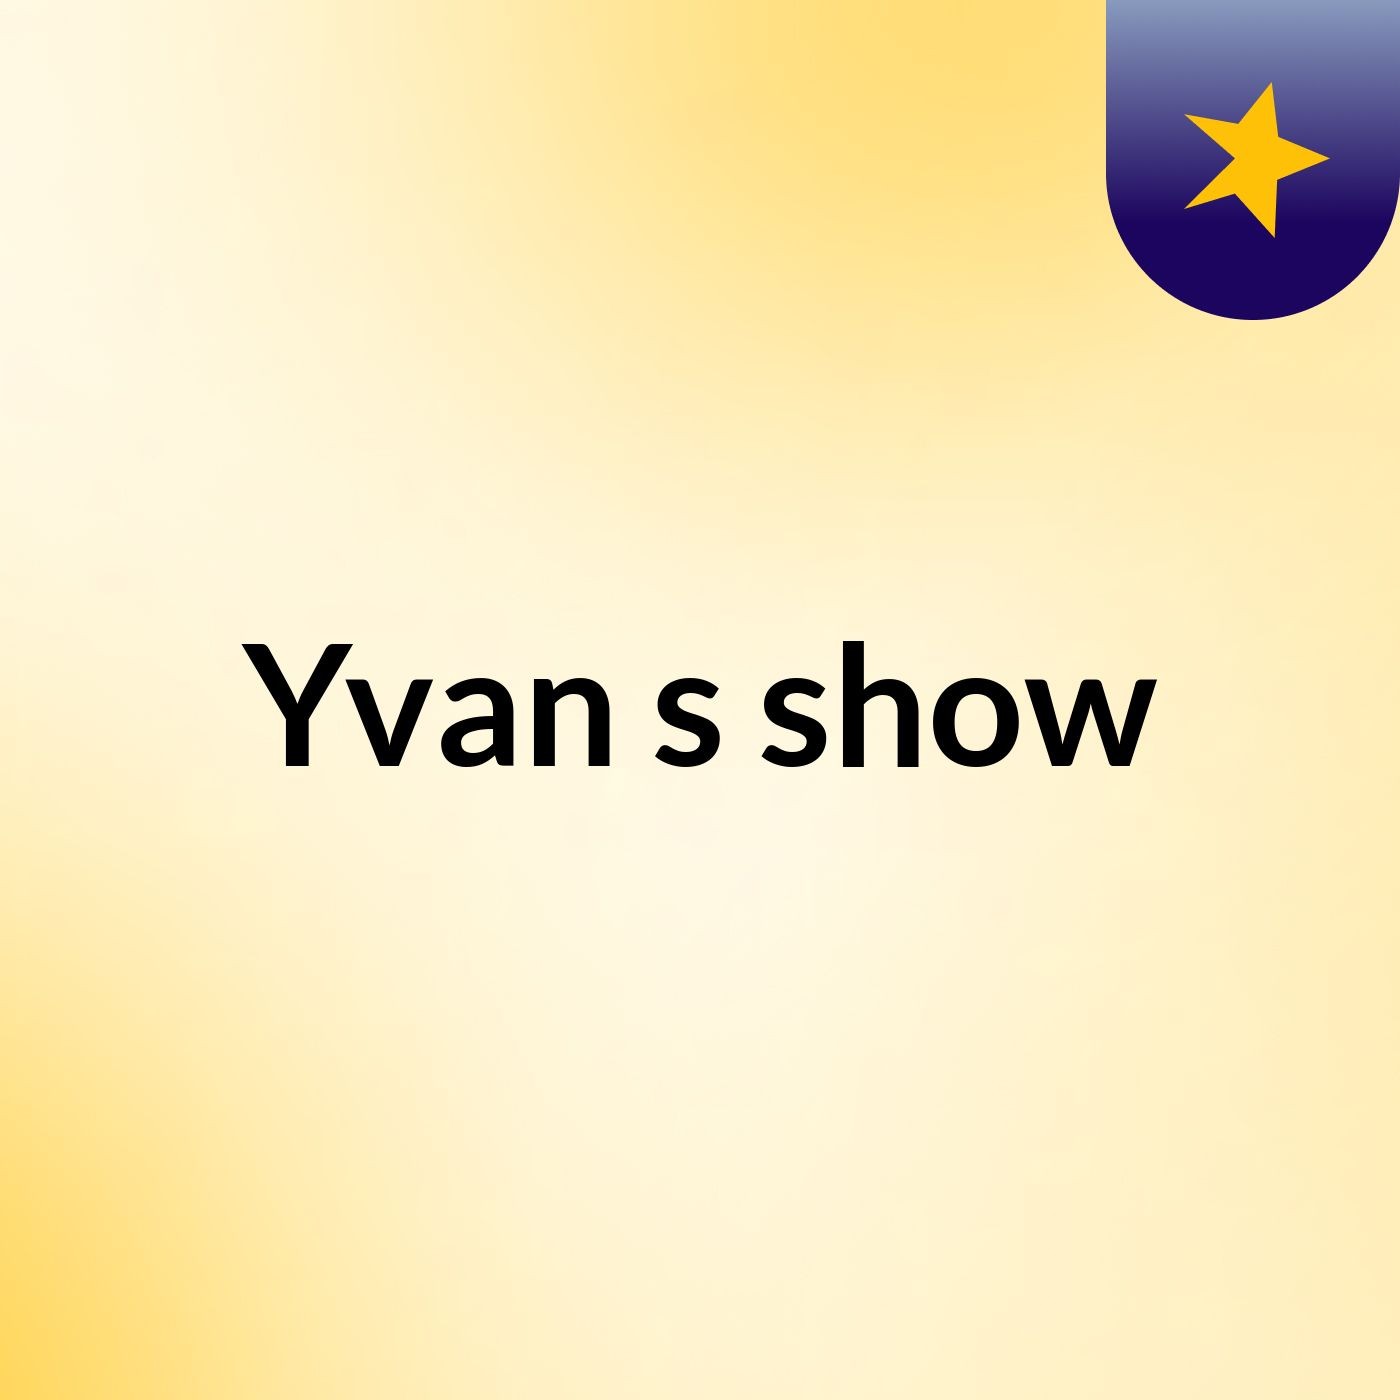 Yvan's show